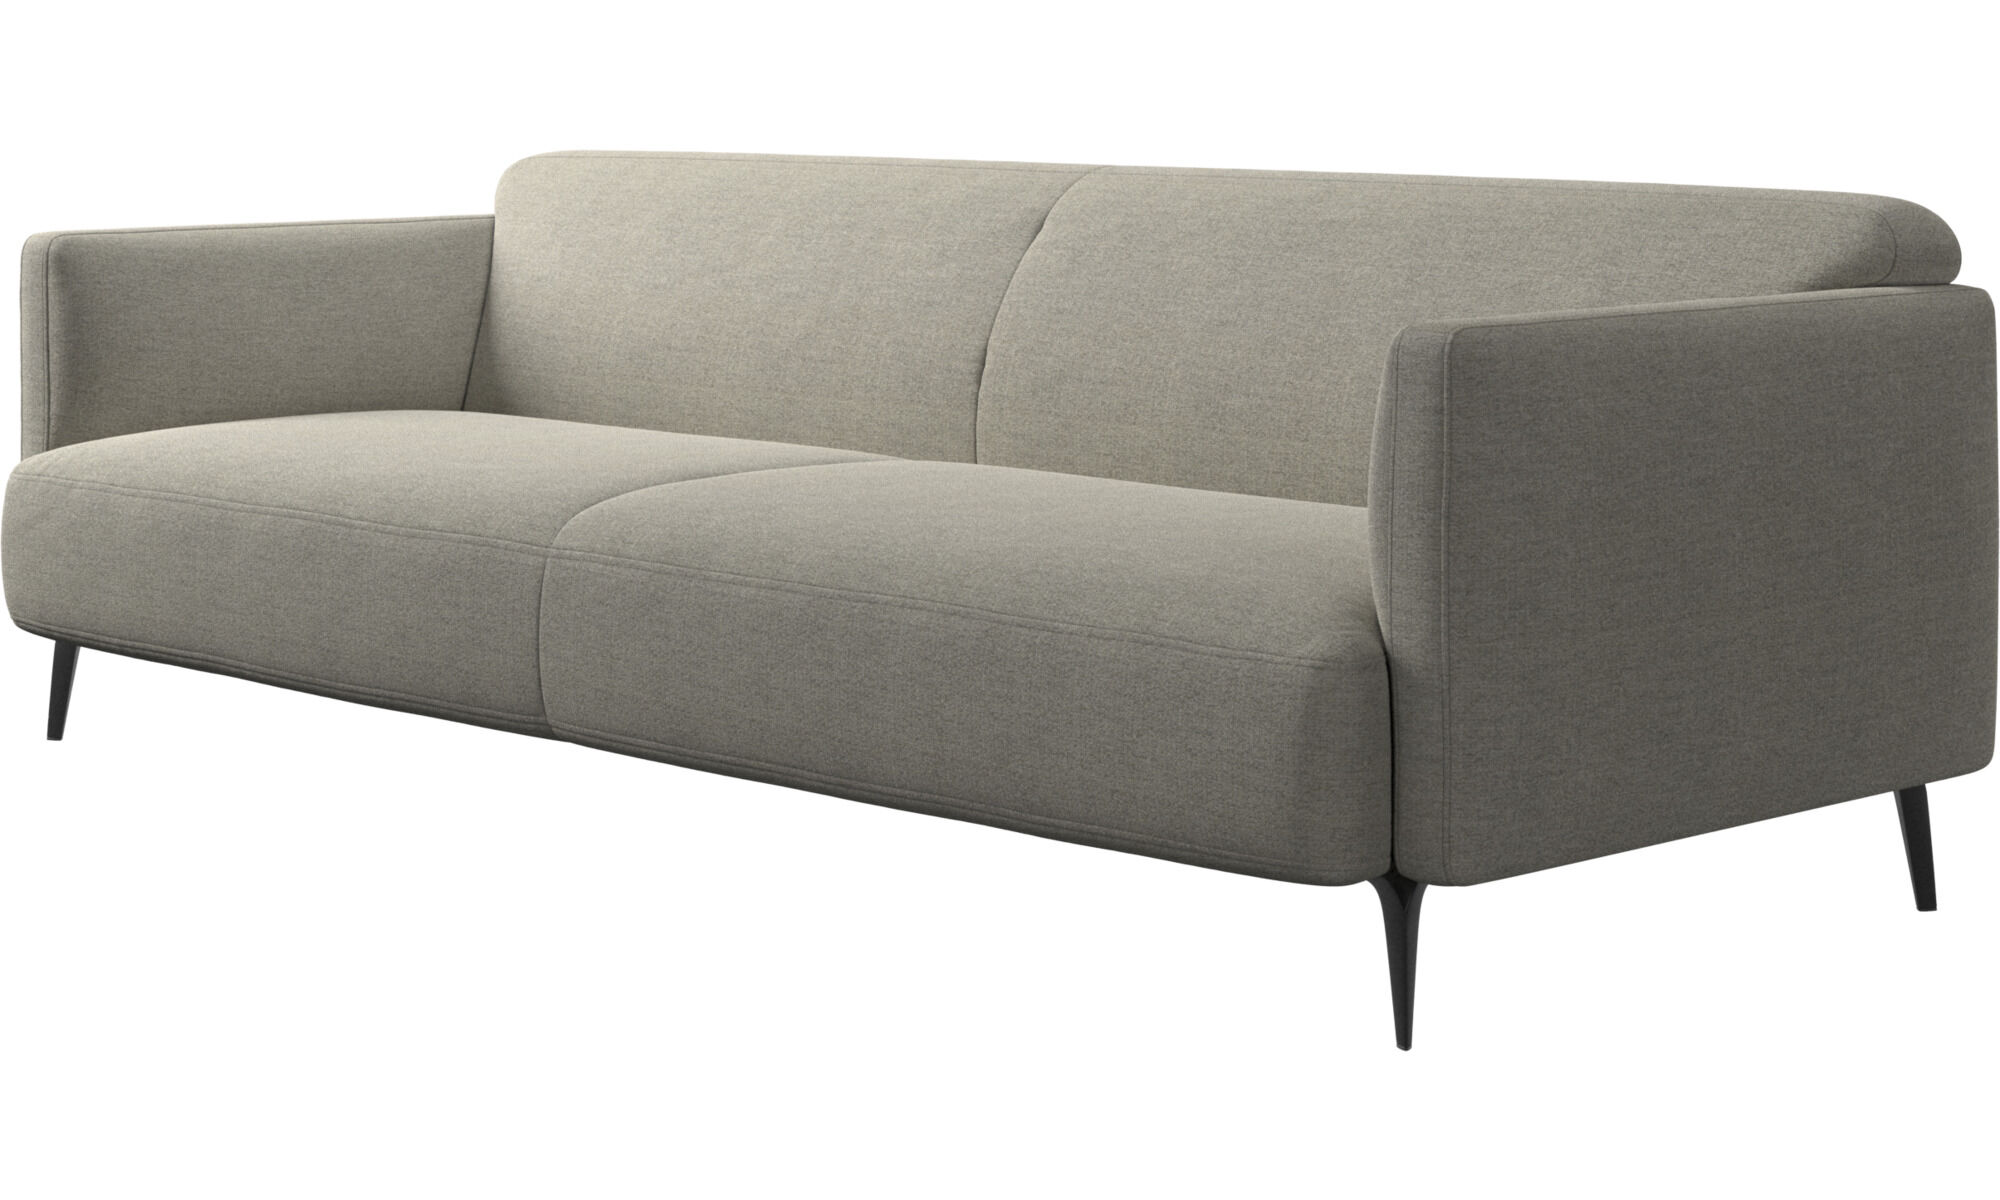 Customized luxury modern design home furniture corner velvet sofa bed L shape soft fabric sofa set